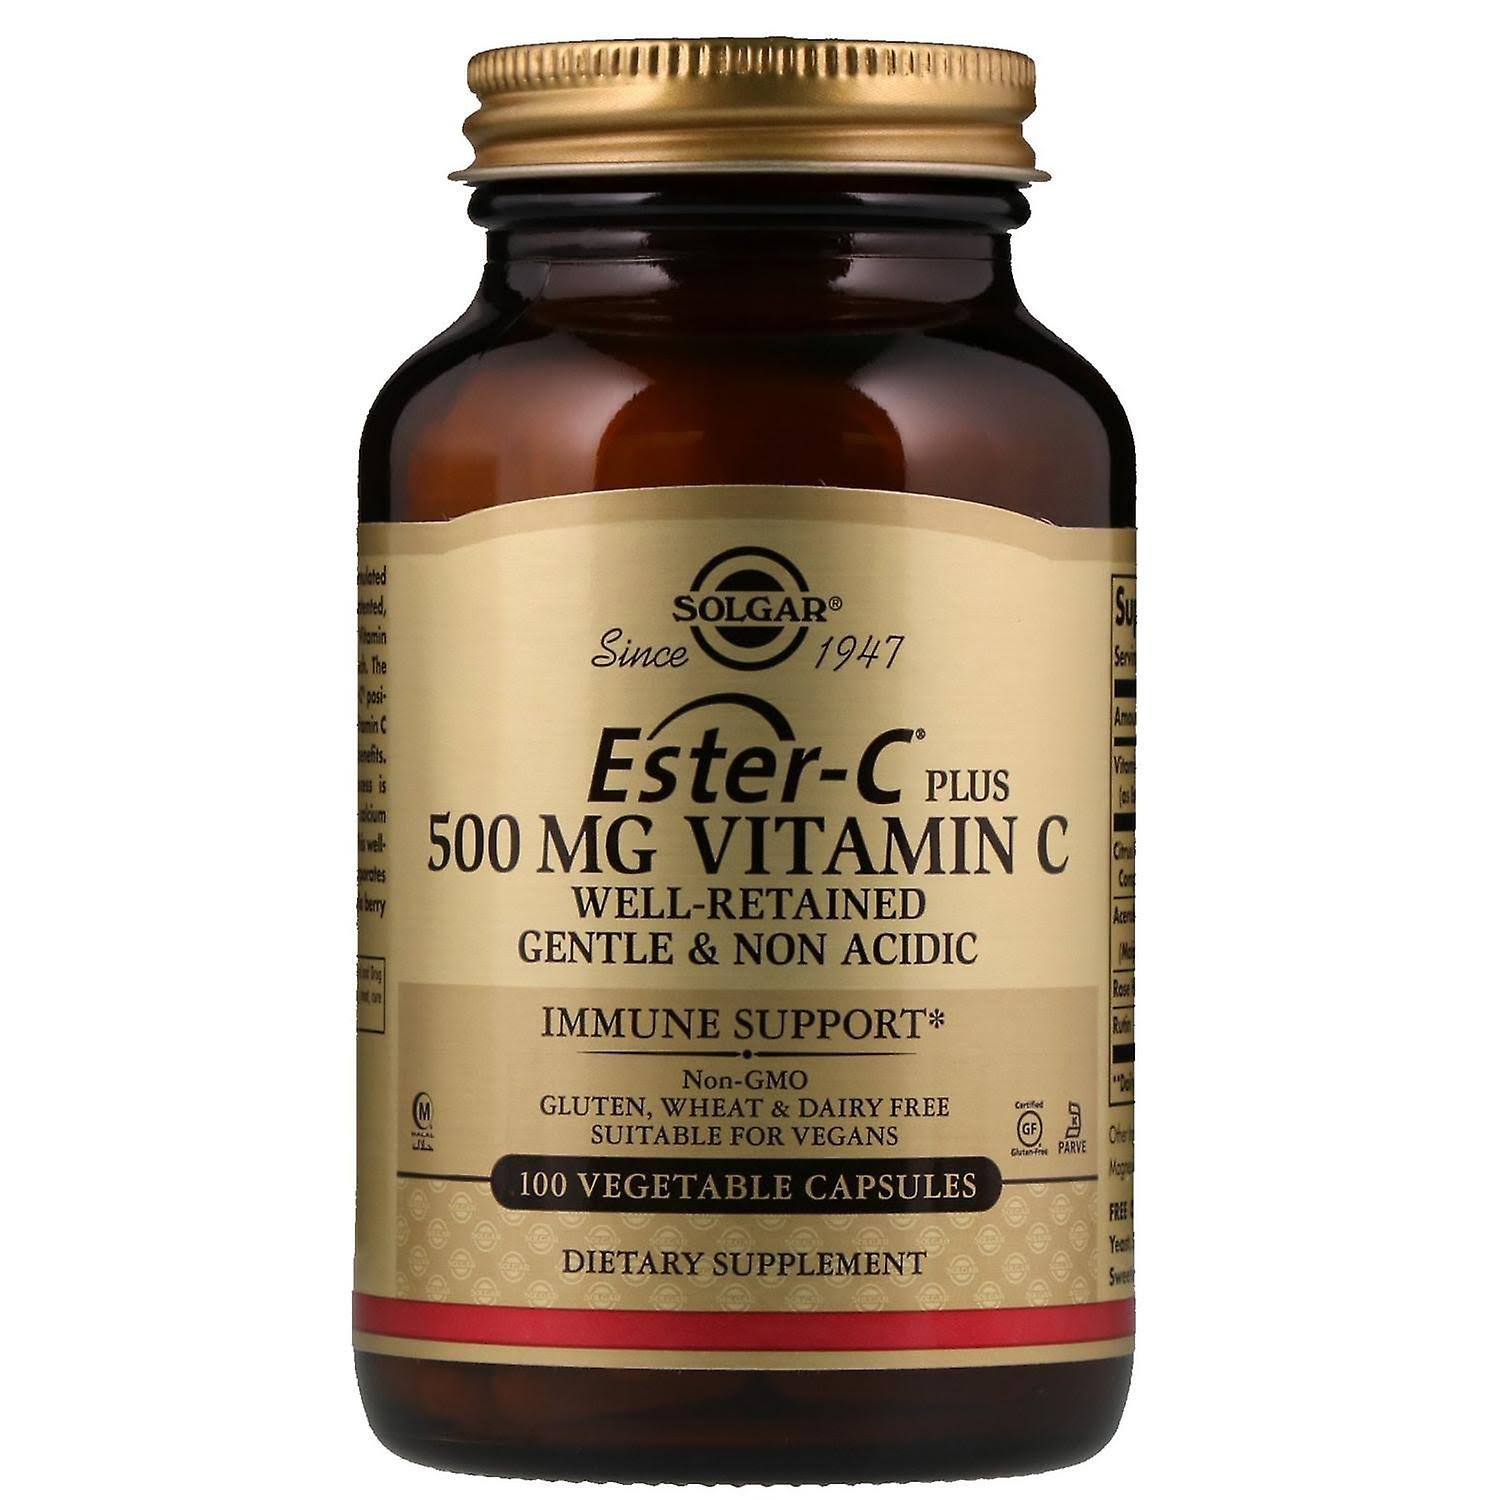 Solgar Ester-C Plus 500 mg Vitamin C Vegetable Capsules